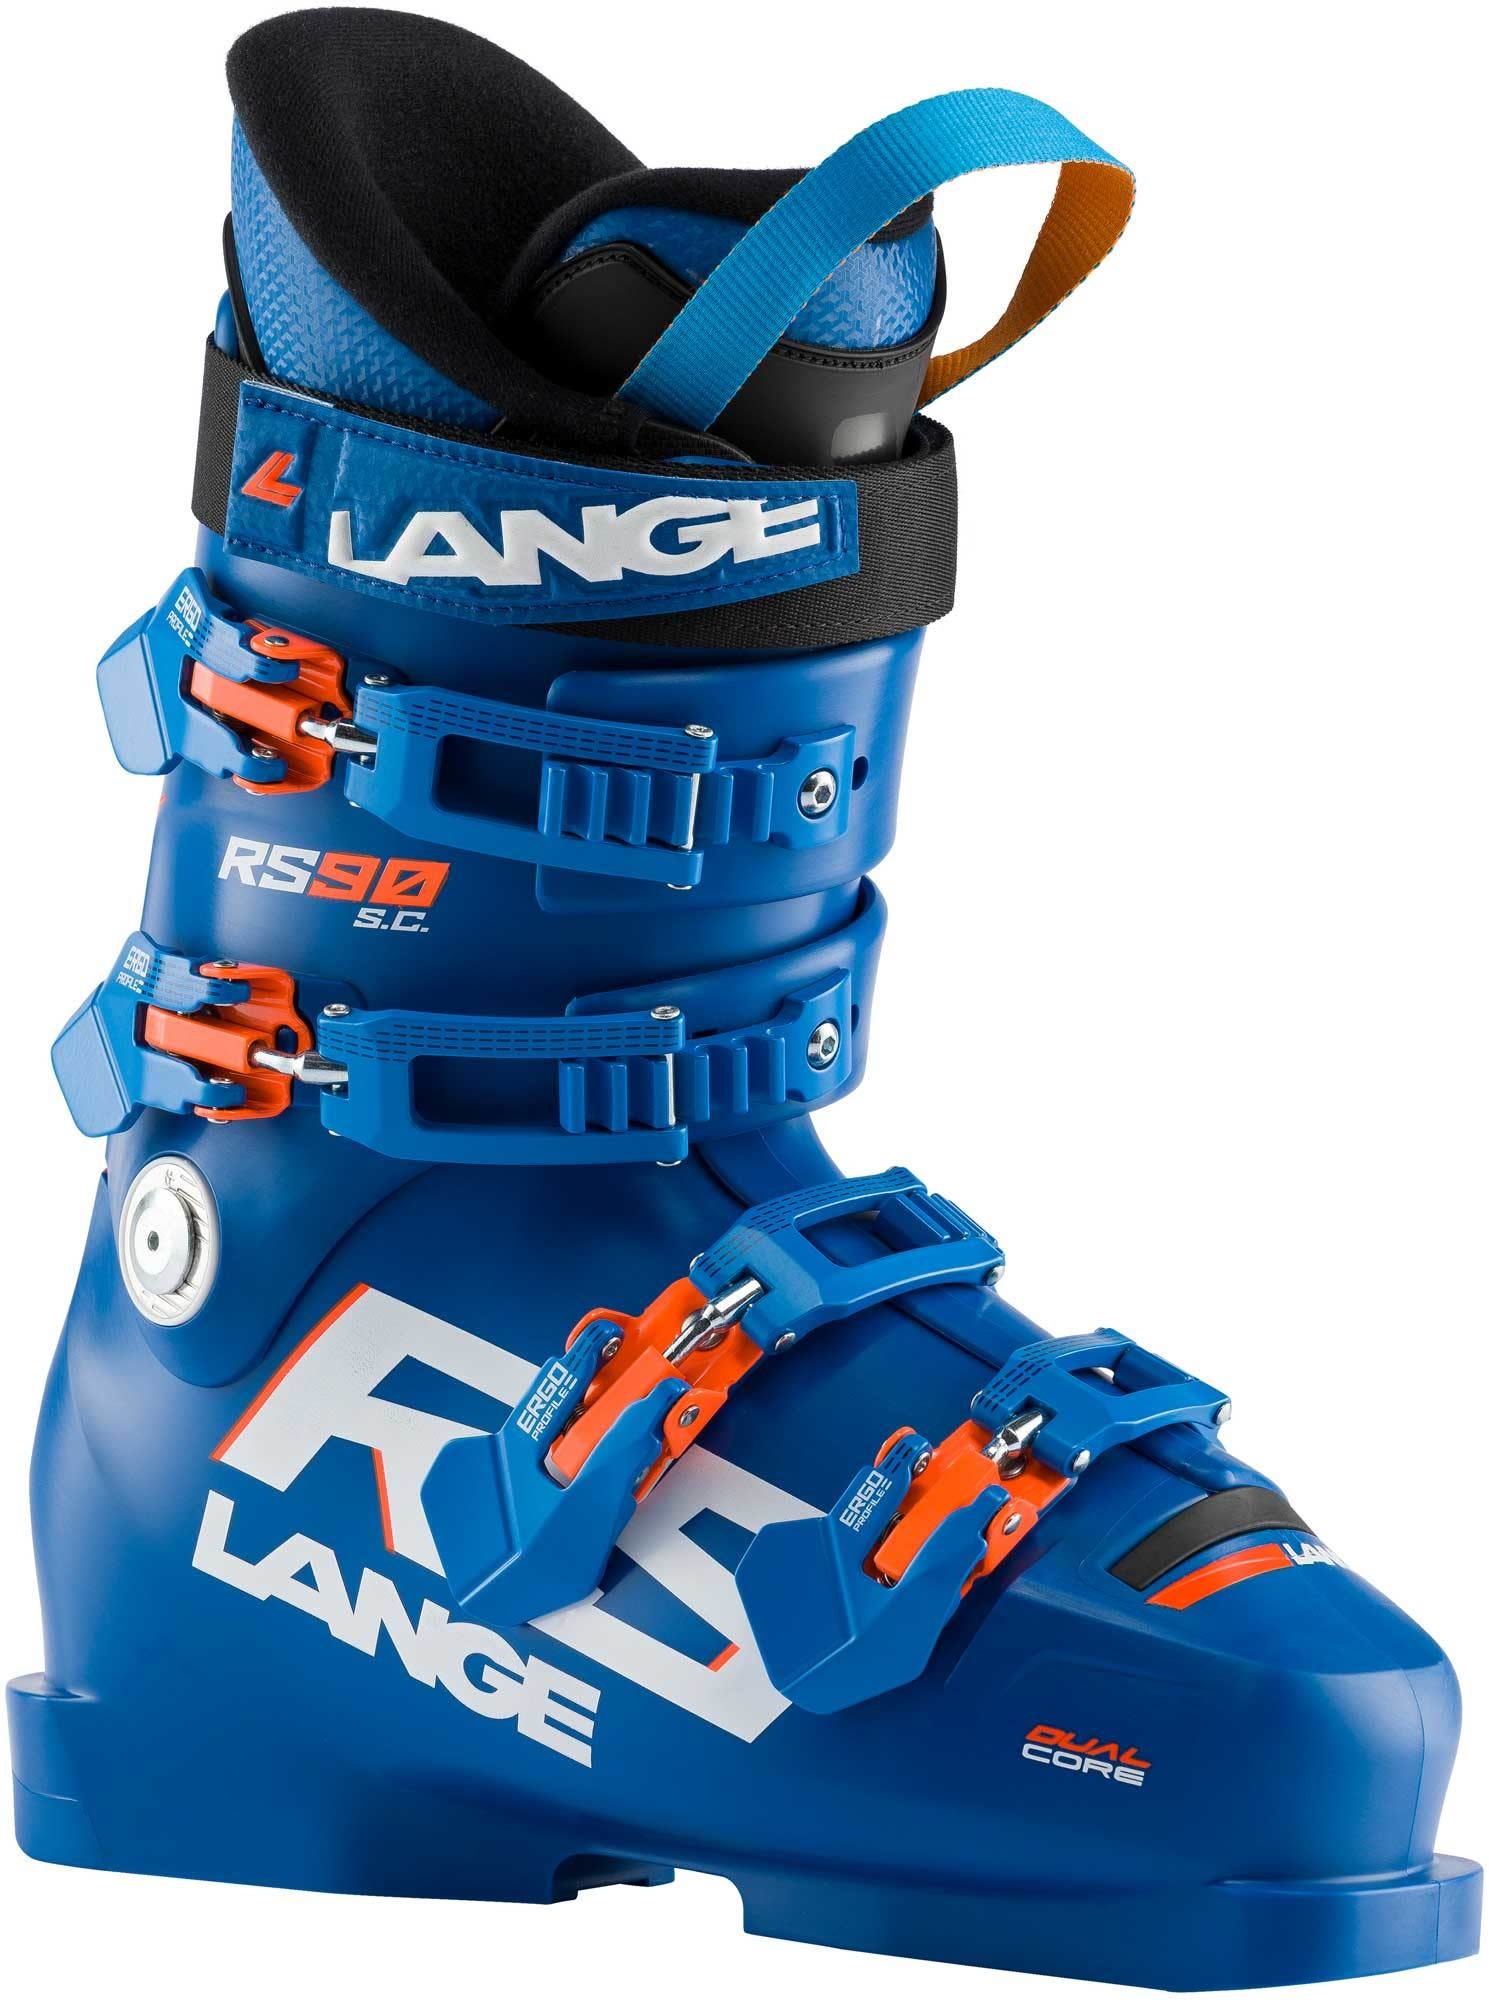 Lange Rs 90 S.C. (Power Blue) (21/22)